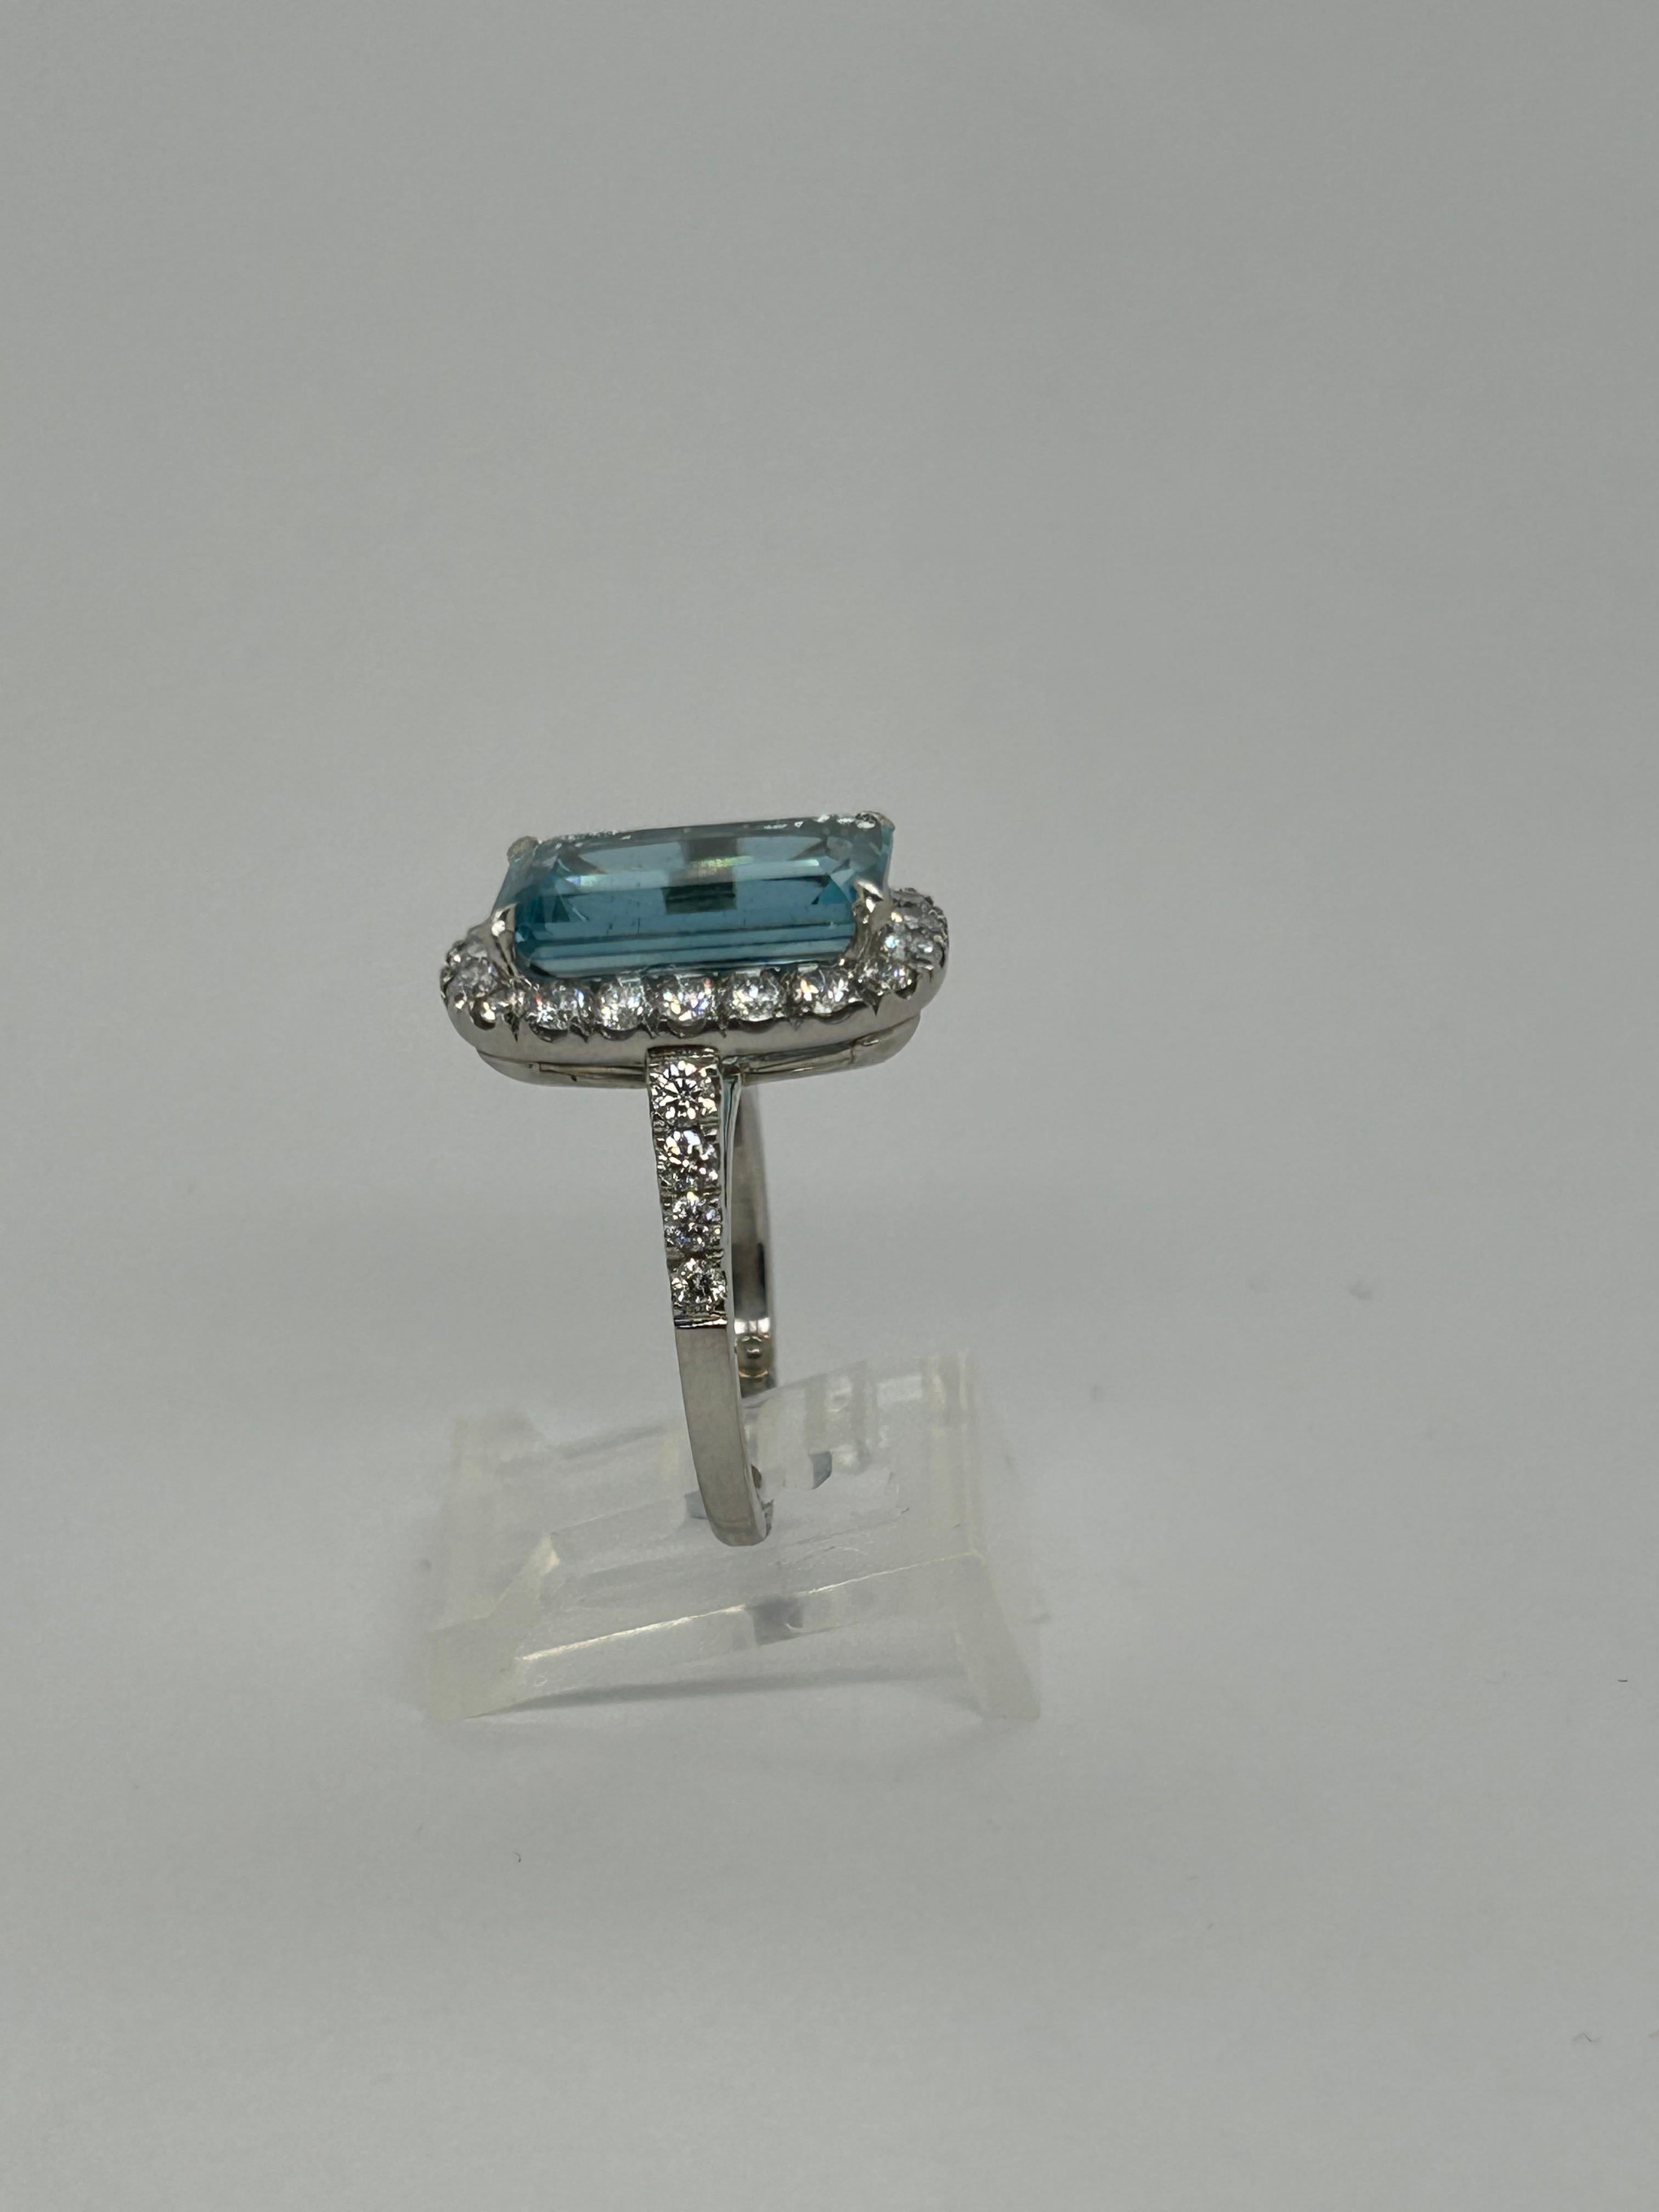 1950' Platinum aquamarine diamond ring. aquamarine approx 11.0 cts Diamond approx 2.5 cts F-G color VS.
ring size :w/ring guard 3.25, without ring guard approx 4.25
